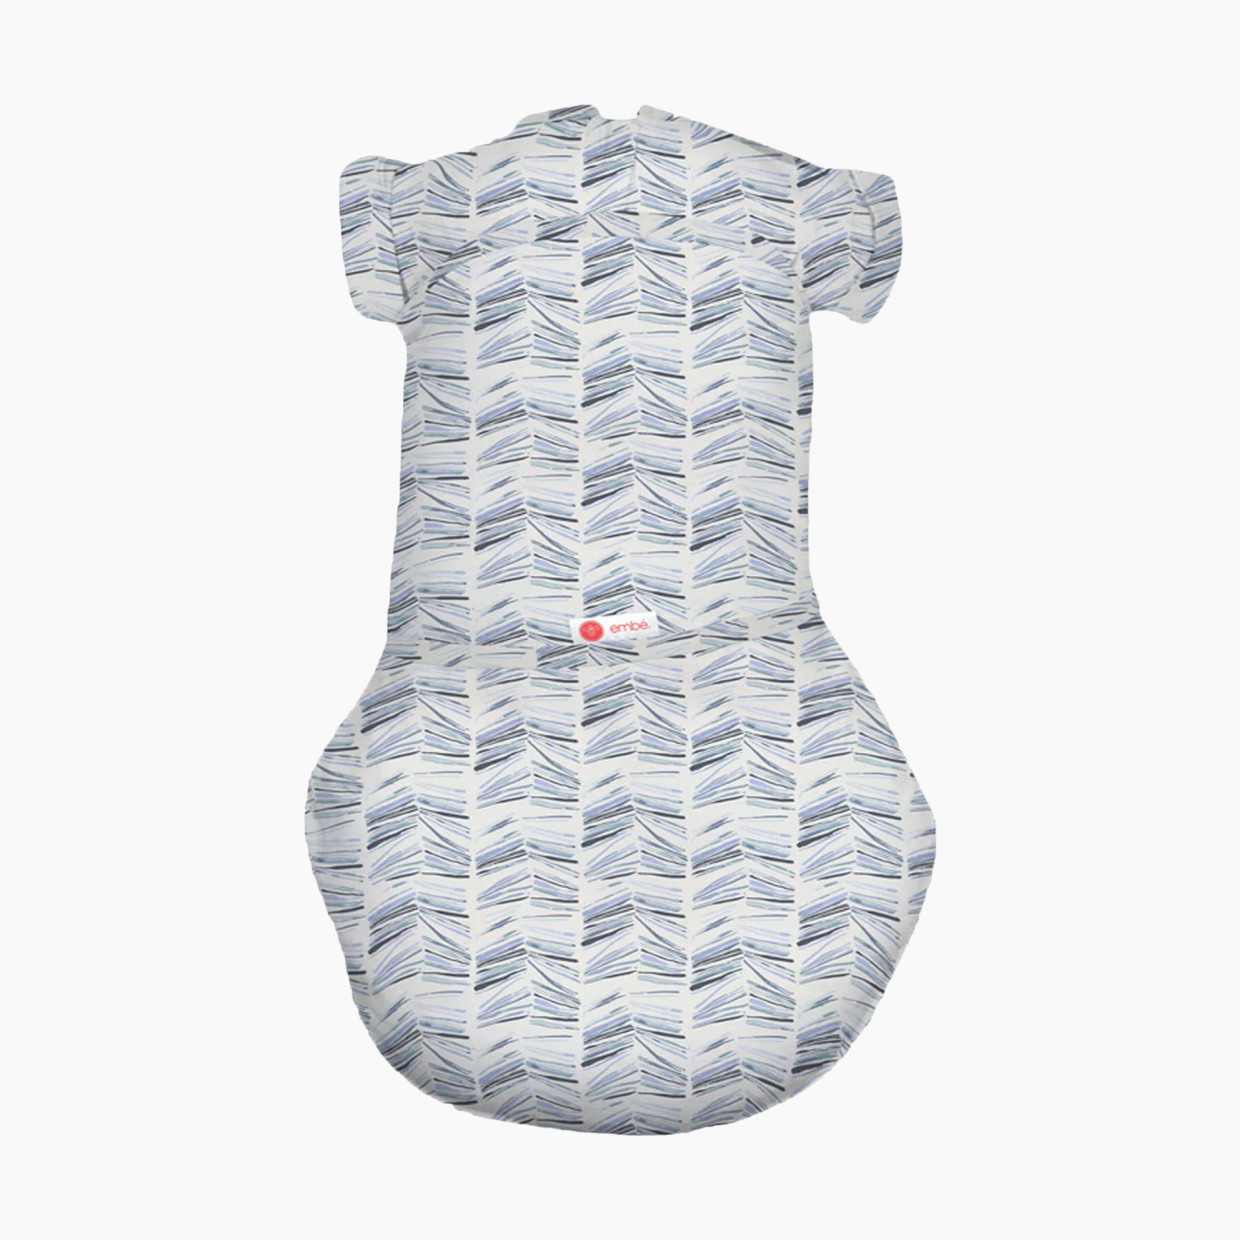 Embe Babies Short Sleeve Swaddle Sack - Angle Stripe, Medium/Large 12-18 Lbs.